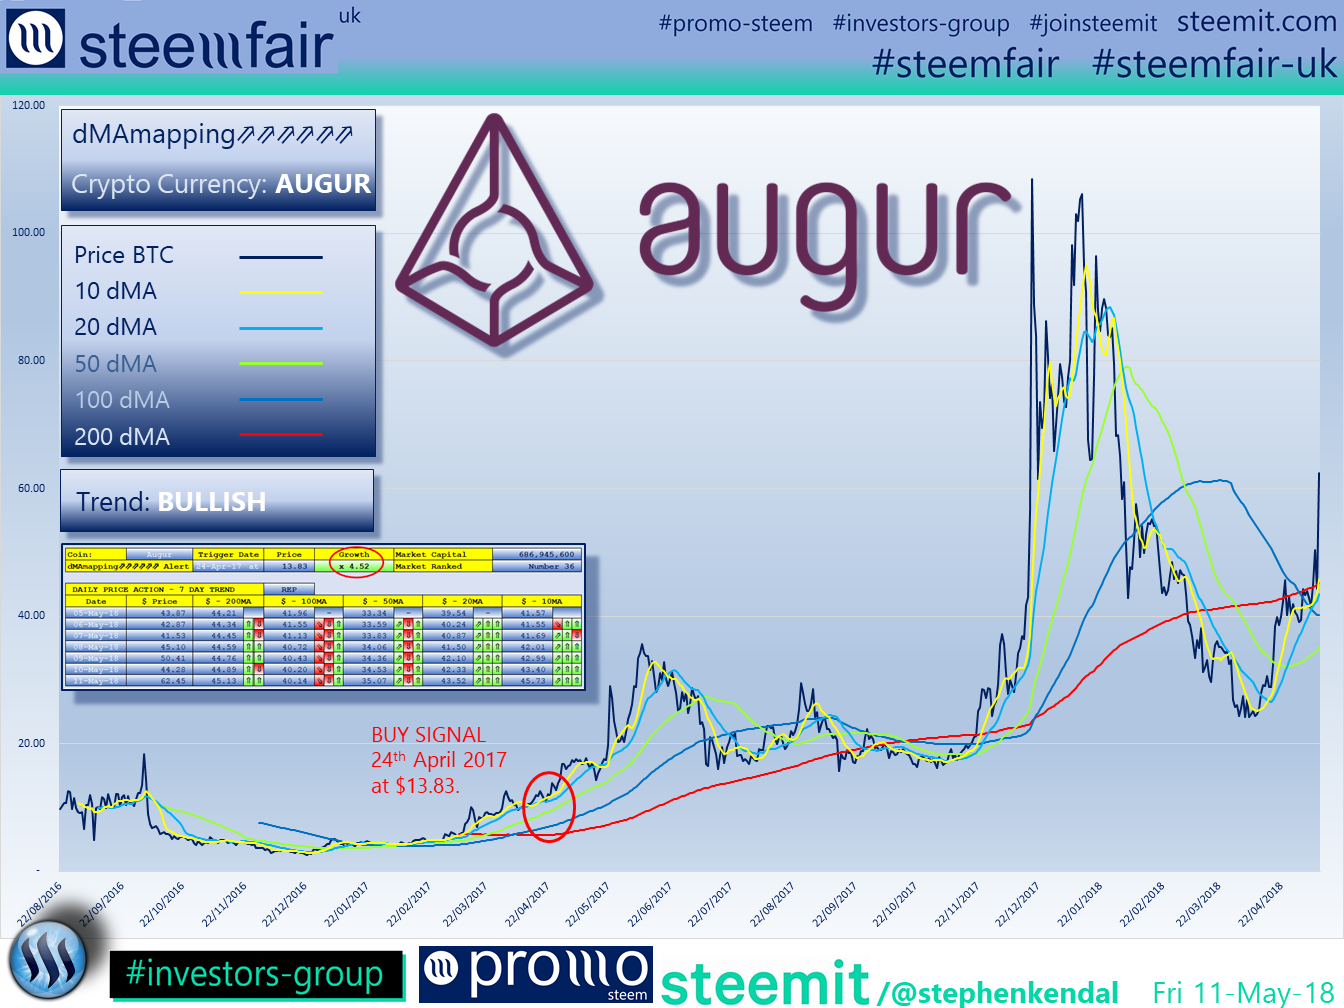 SteemFair SteemFair-uk Promo-Steem Investors-Group Augur